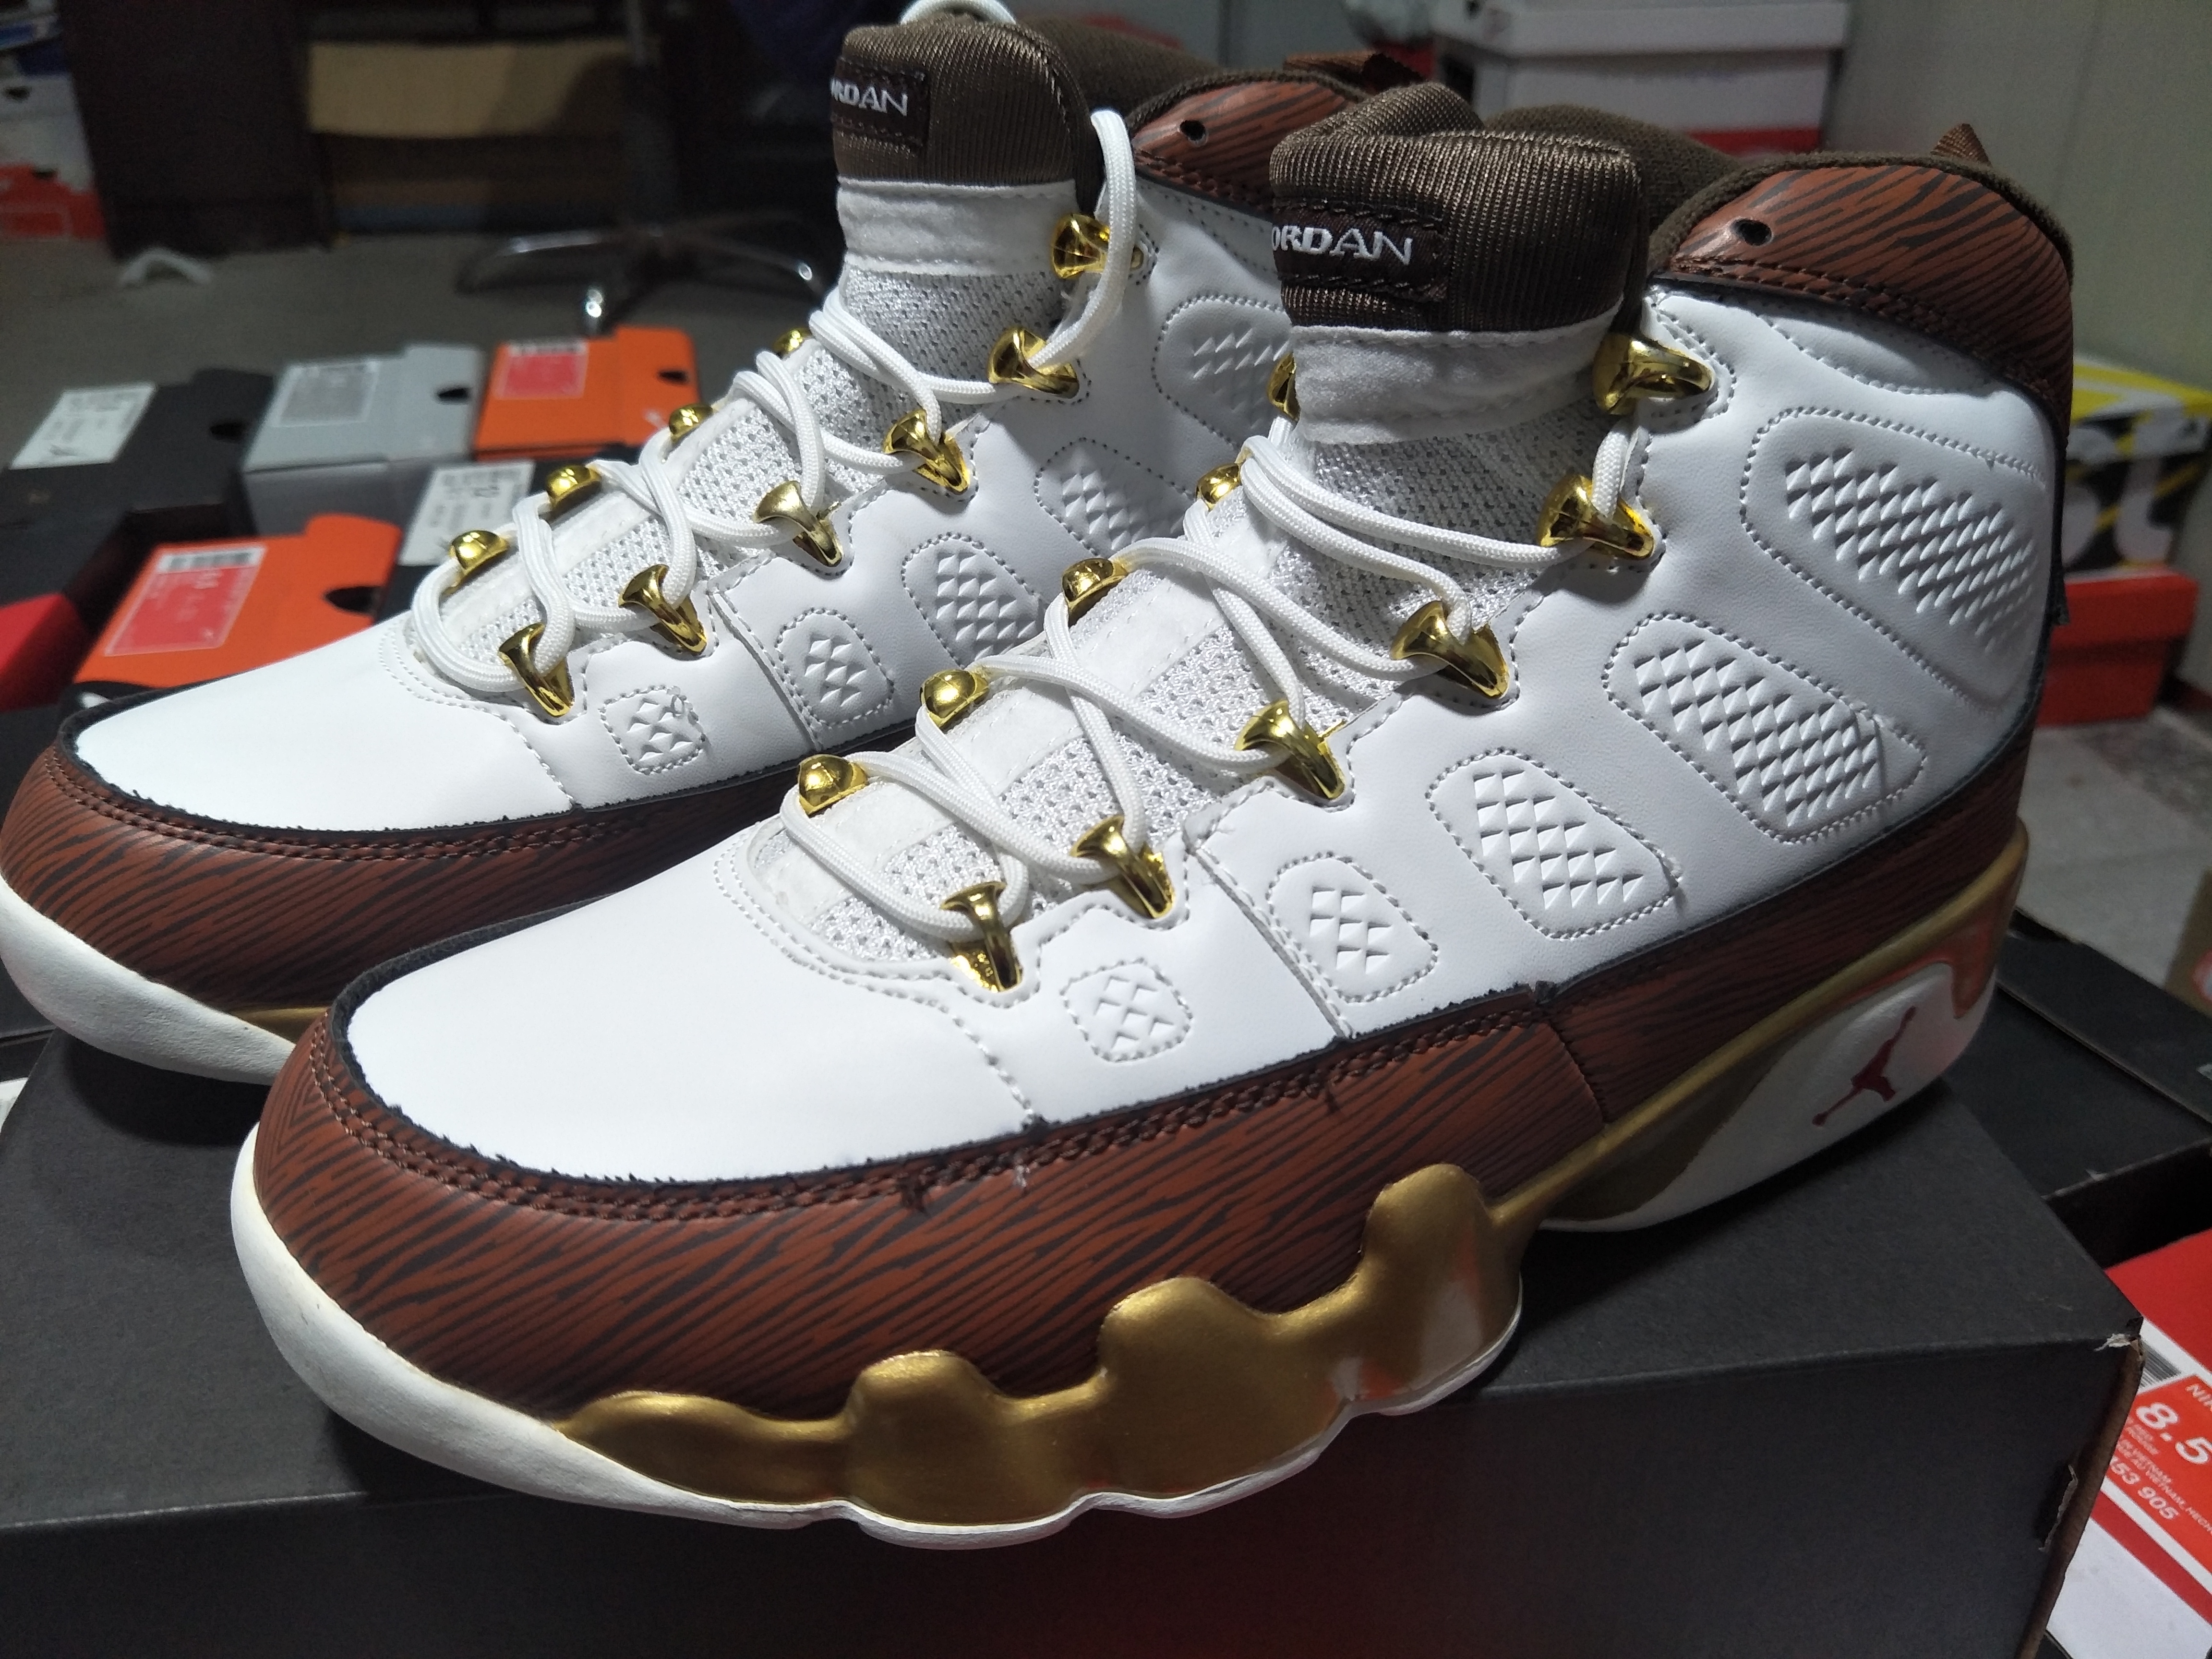 New Air Jordan 9 Retro White Brown Gold Shoes